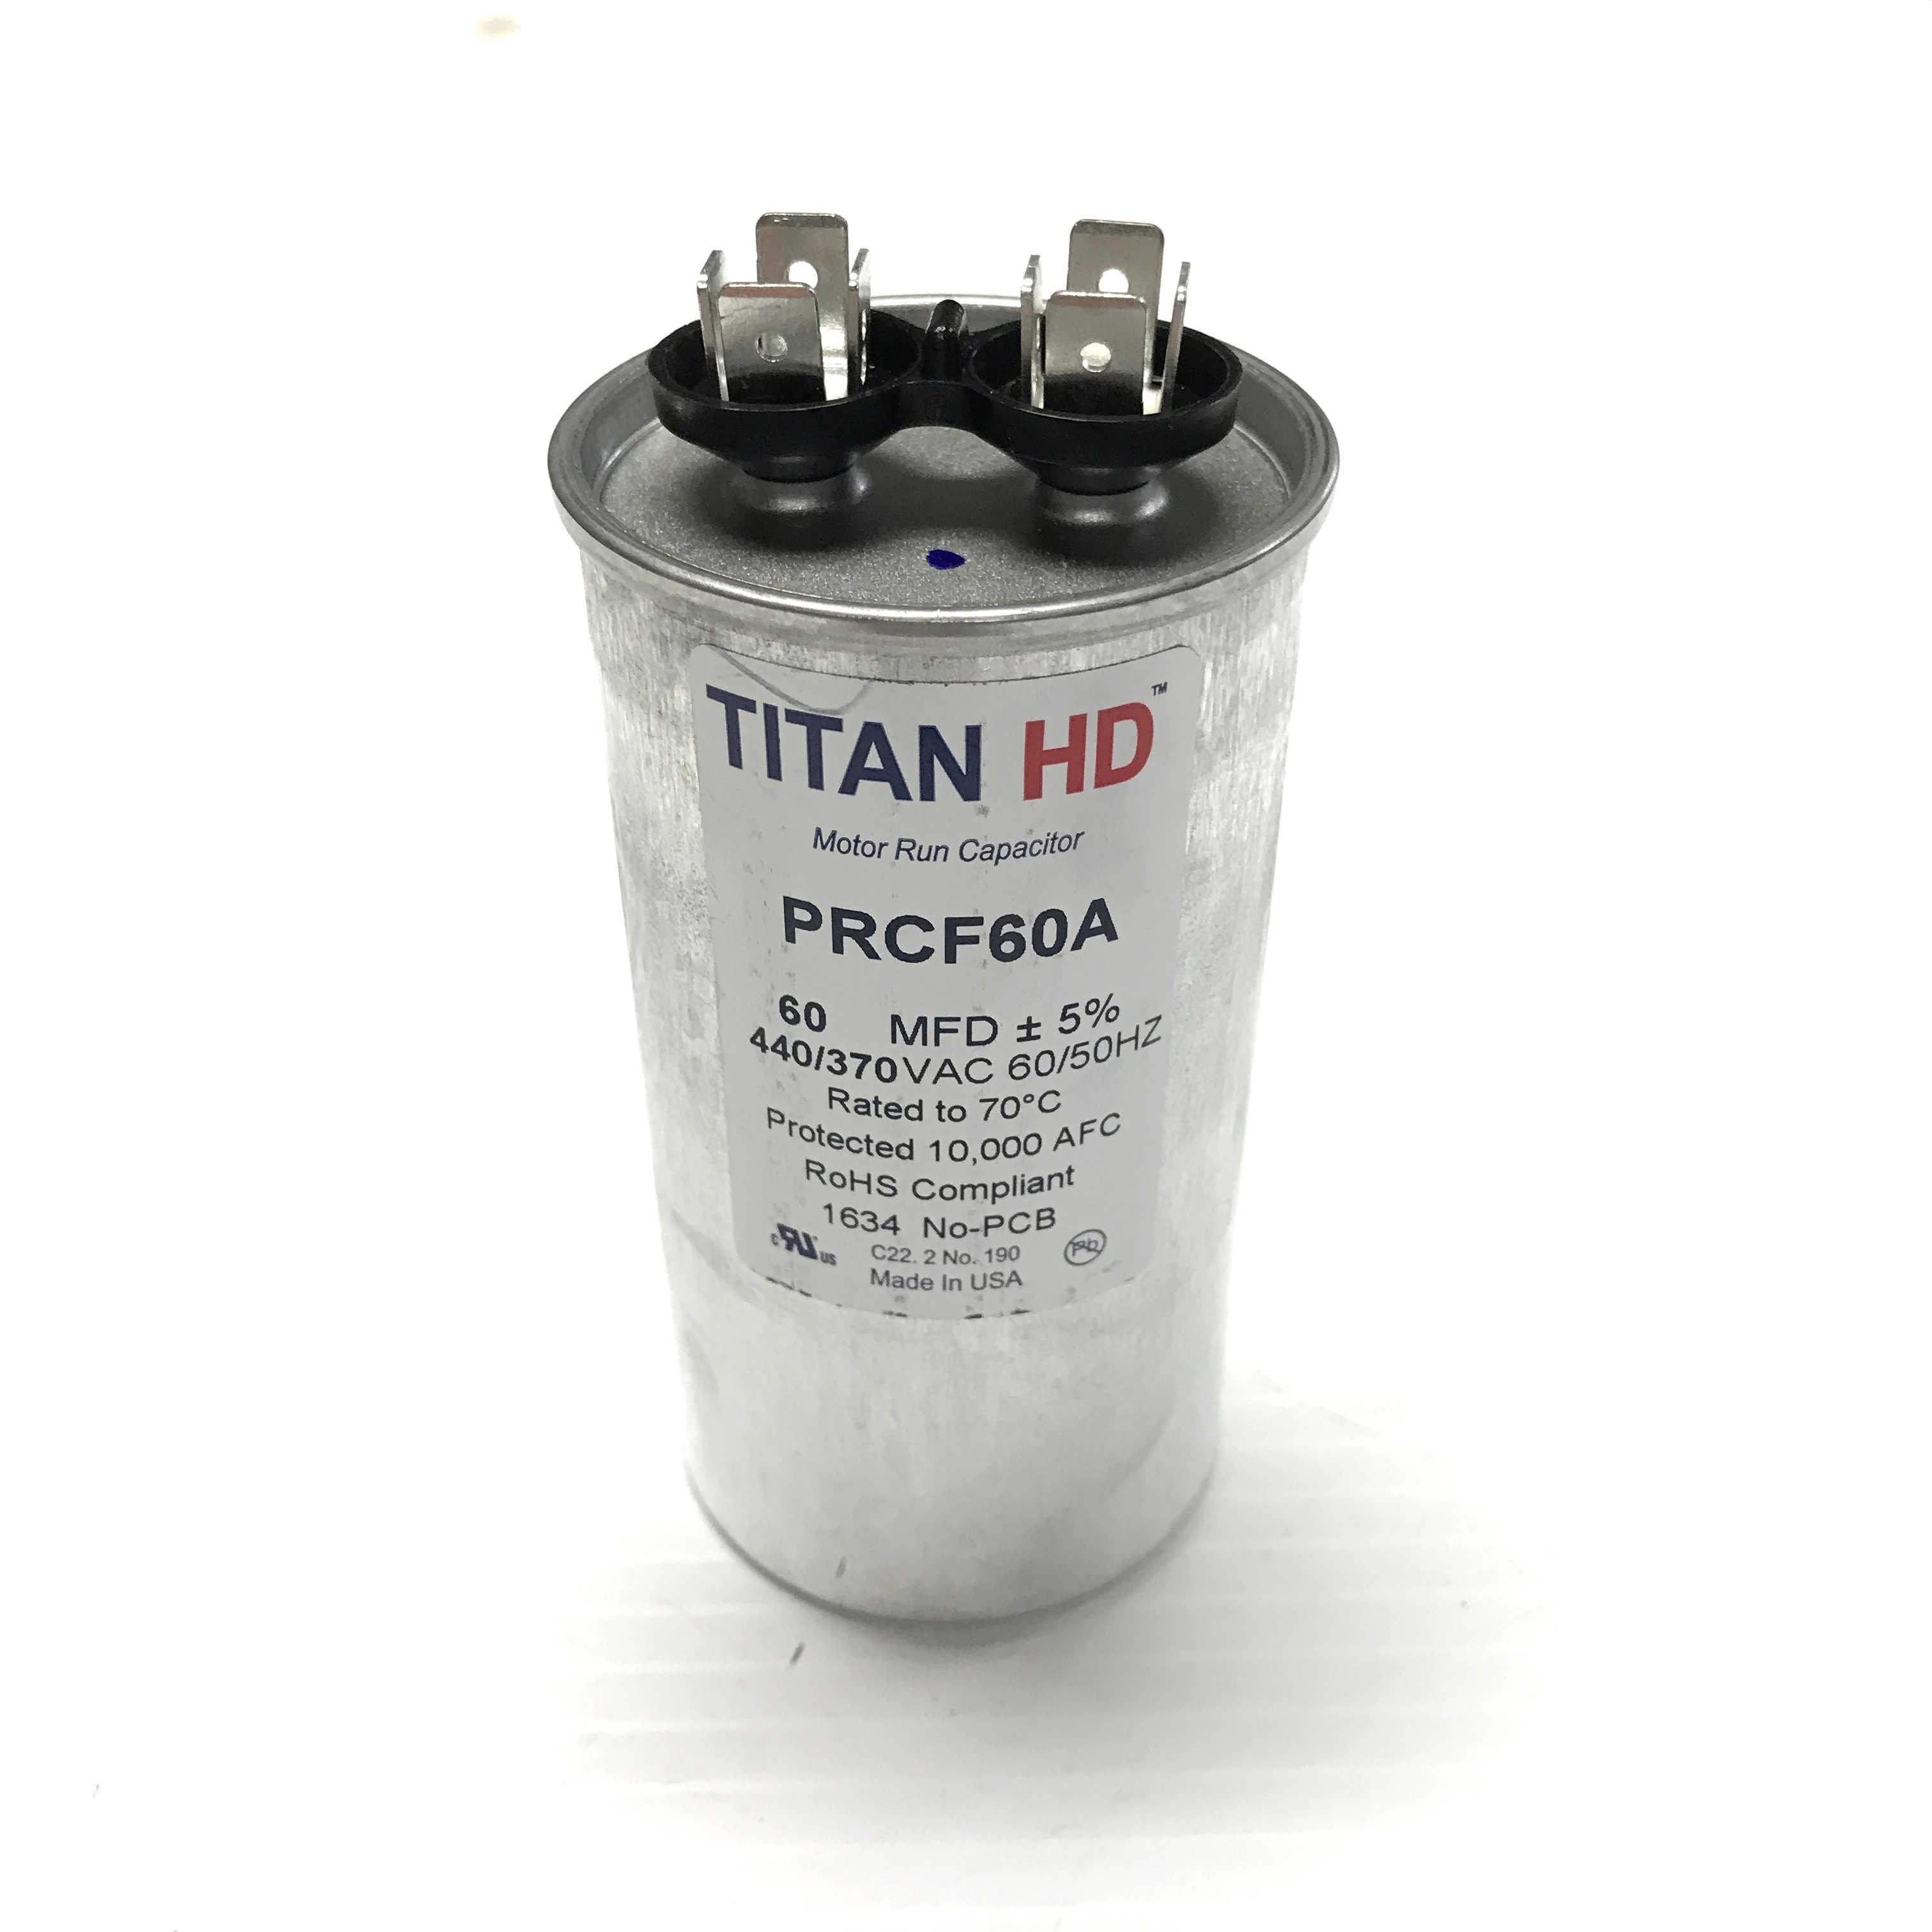 PRCF60A Titan HD Capacitor, 440/370 Vac, 60 MFD